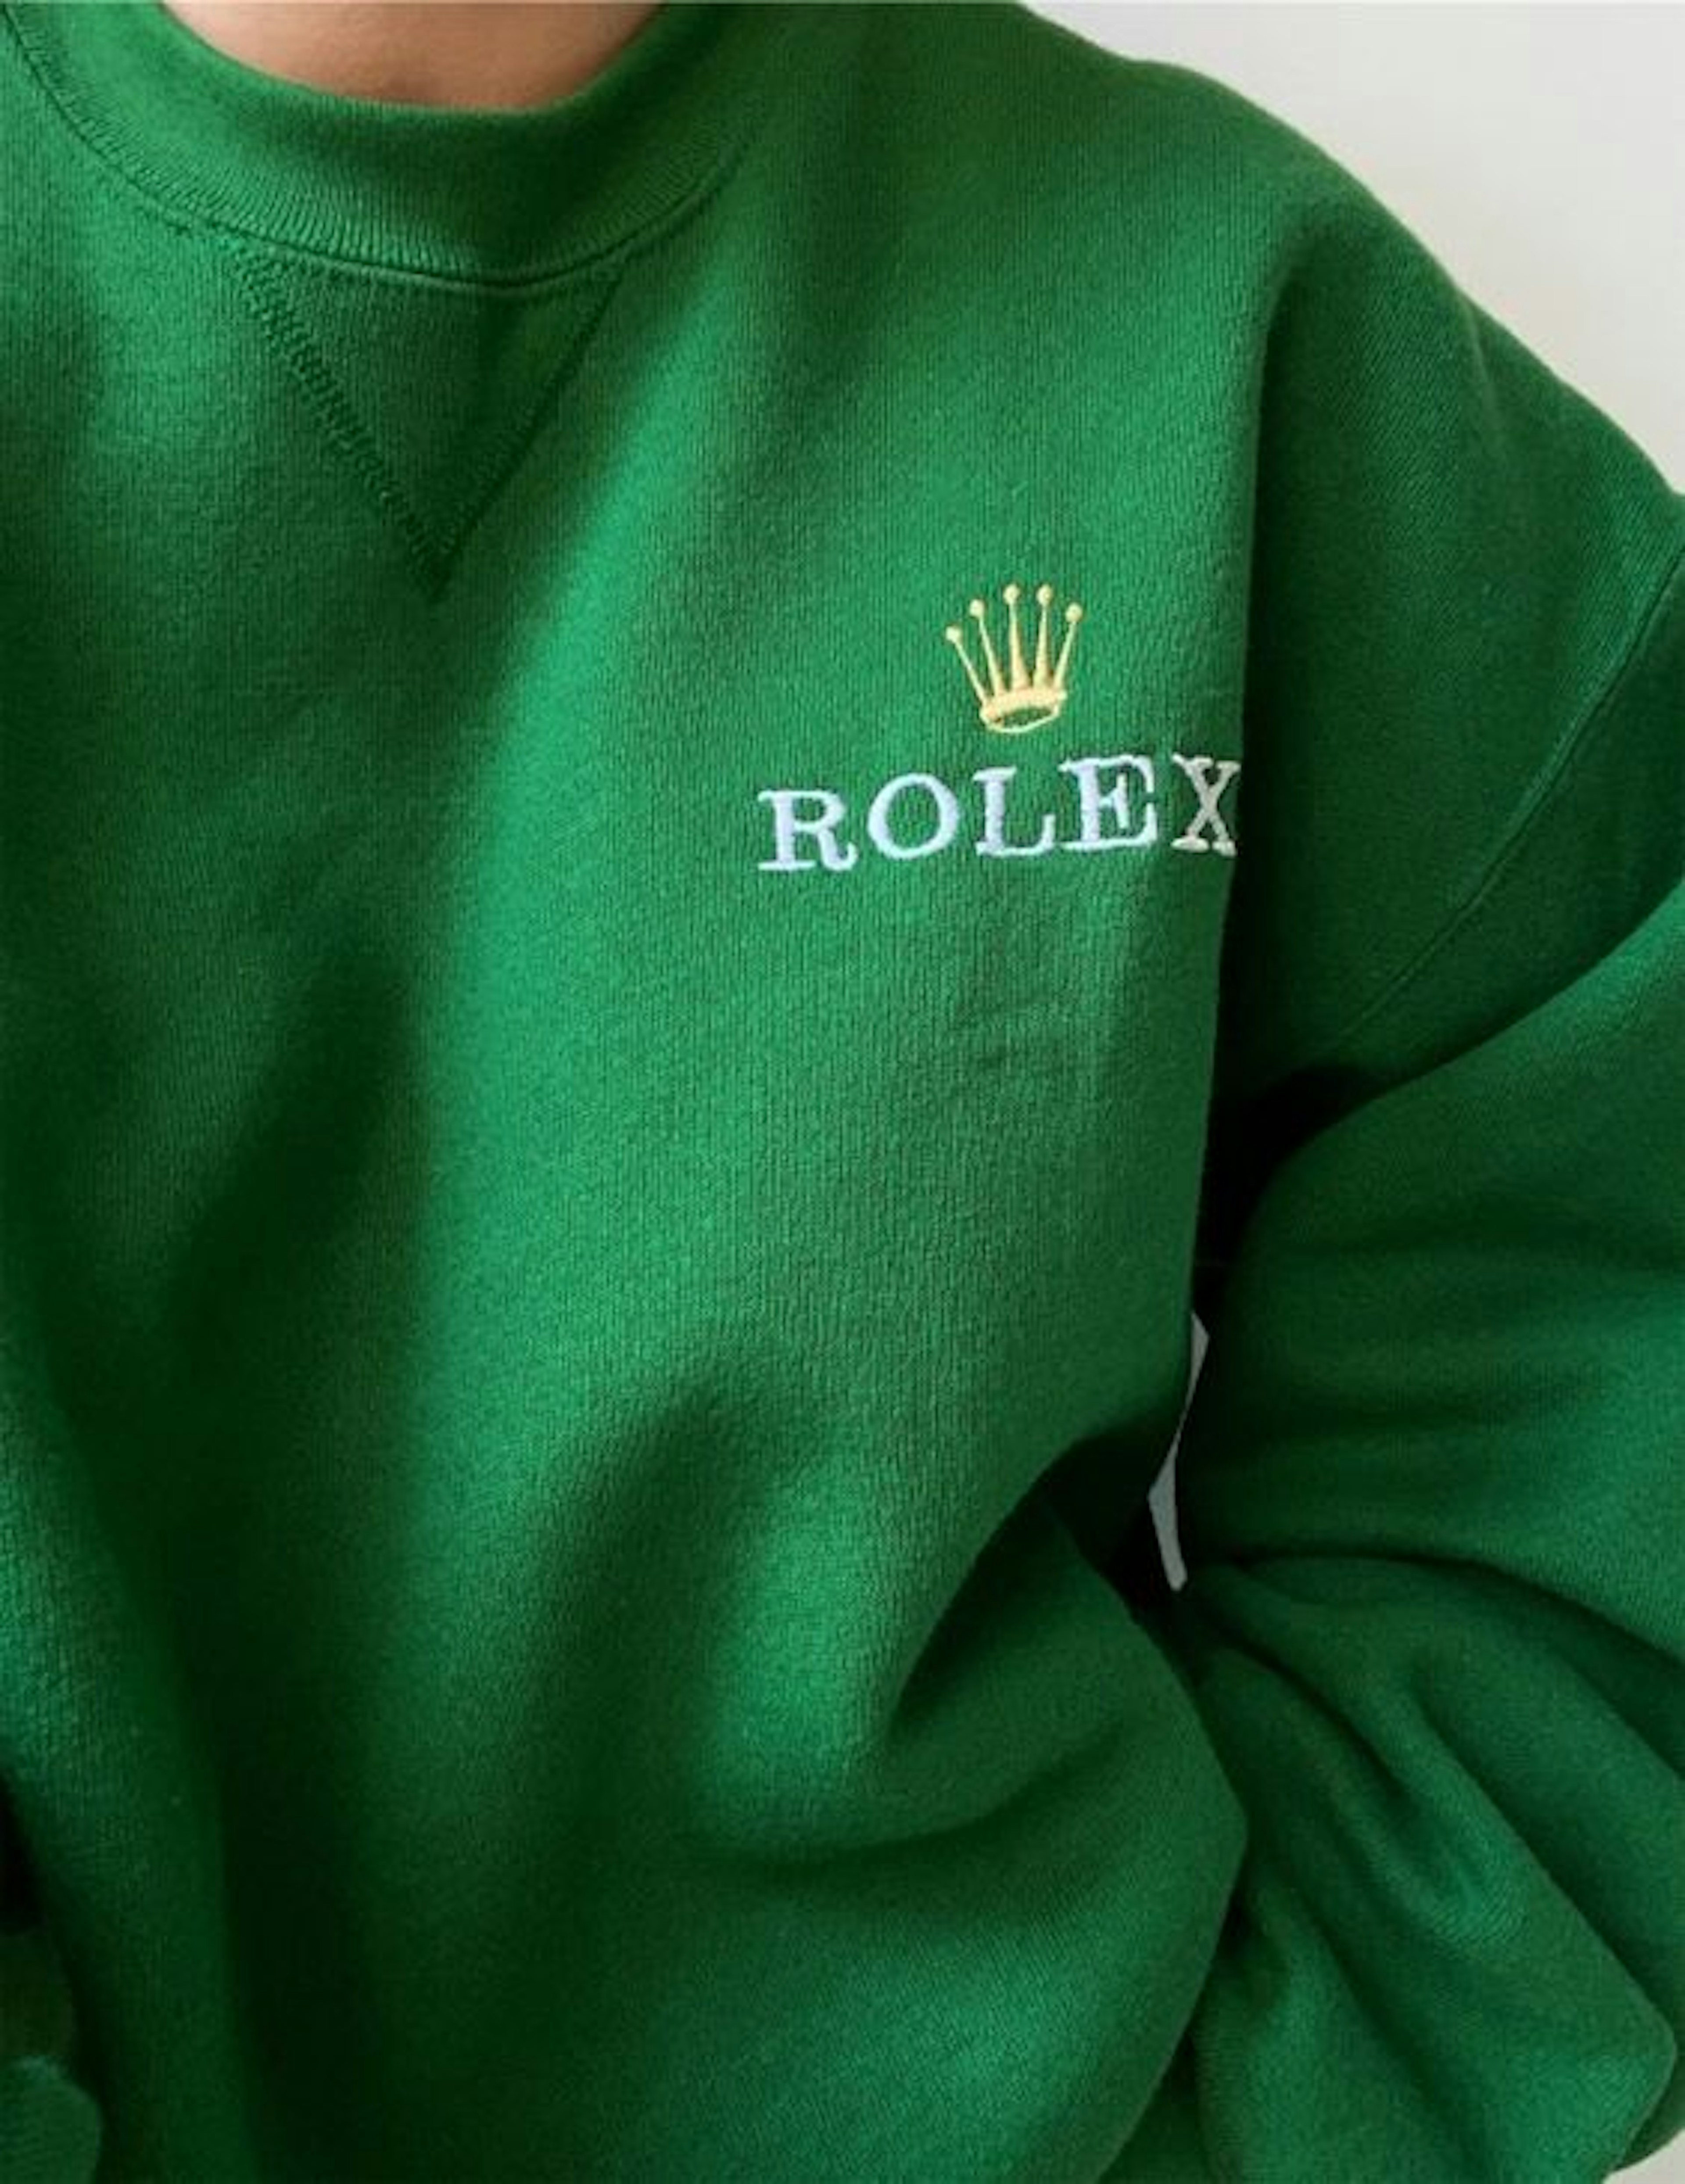 Rolex branded sweatshirt